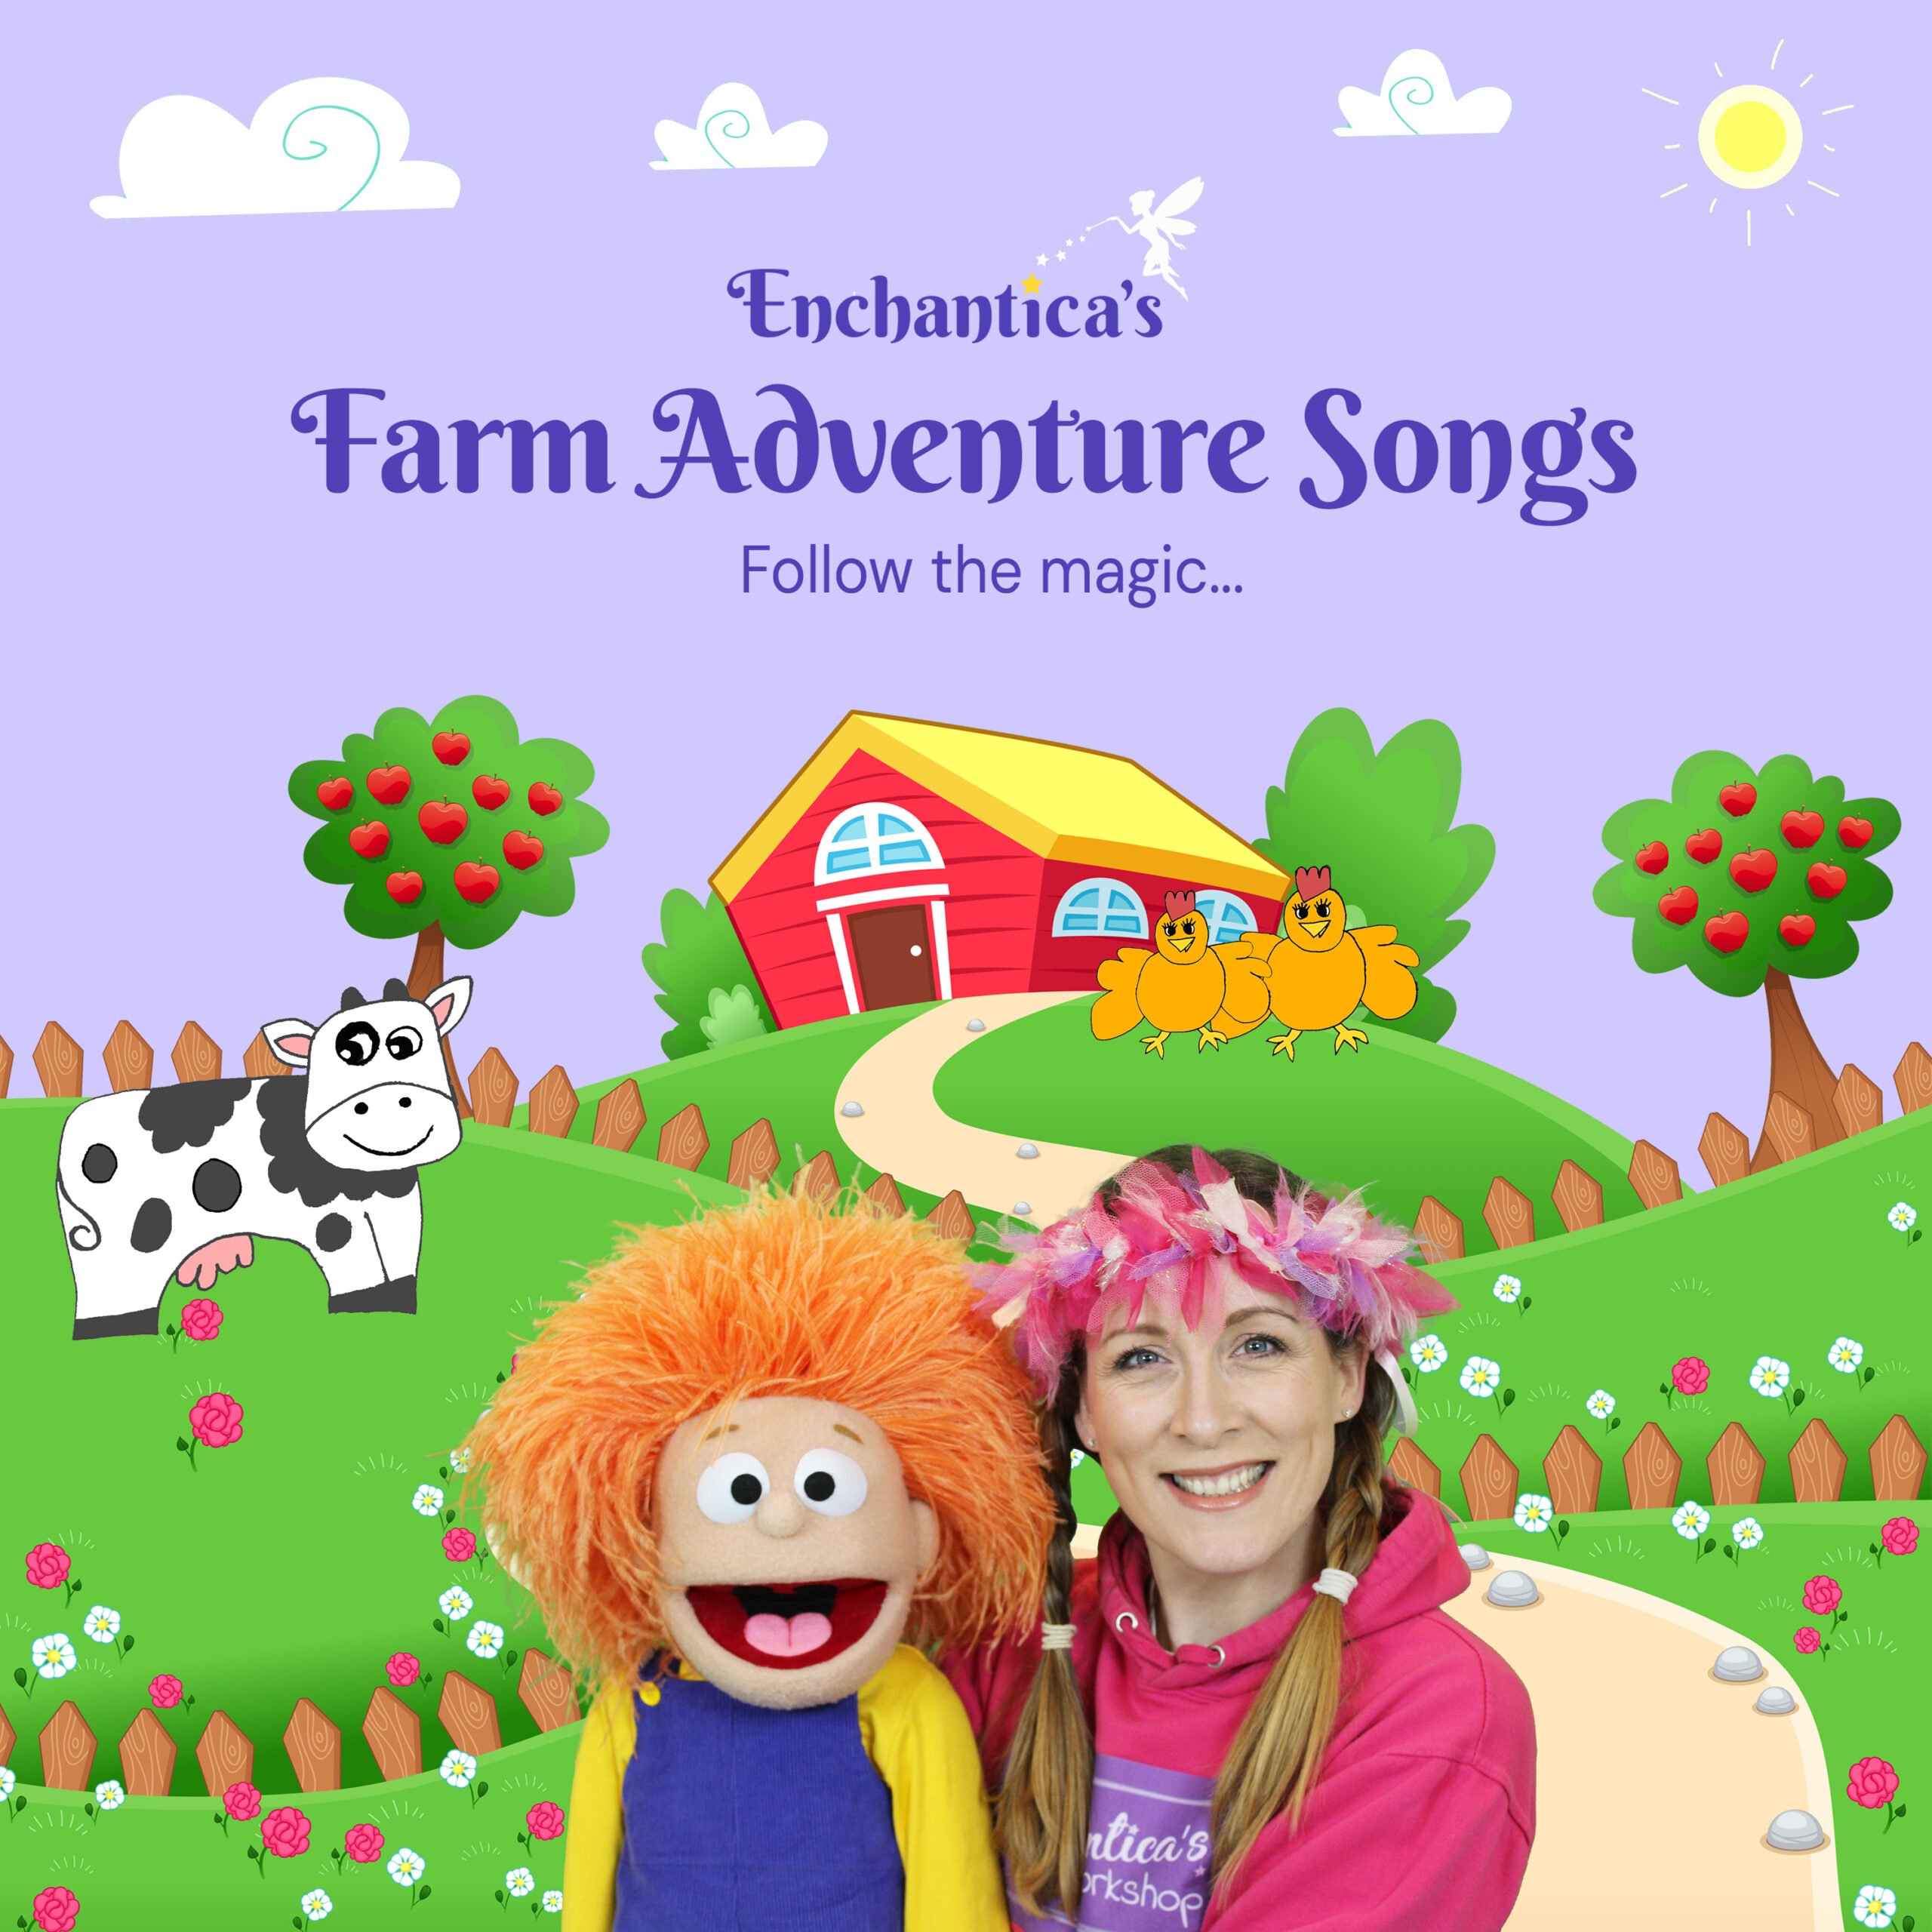 Enchantica's Farm Adventure Songs